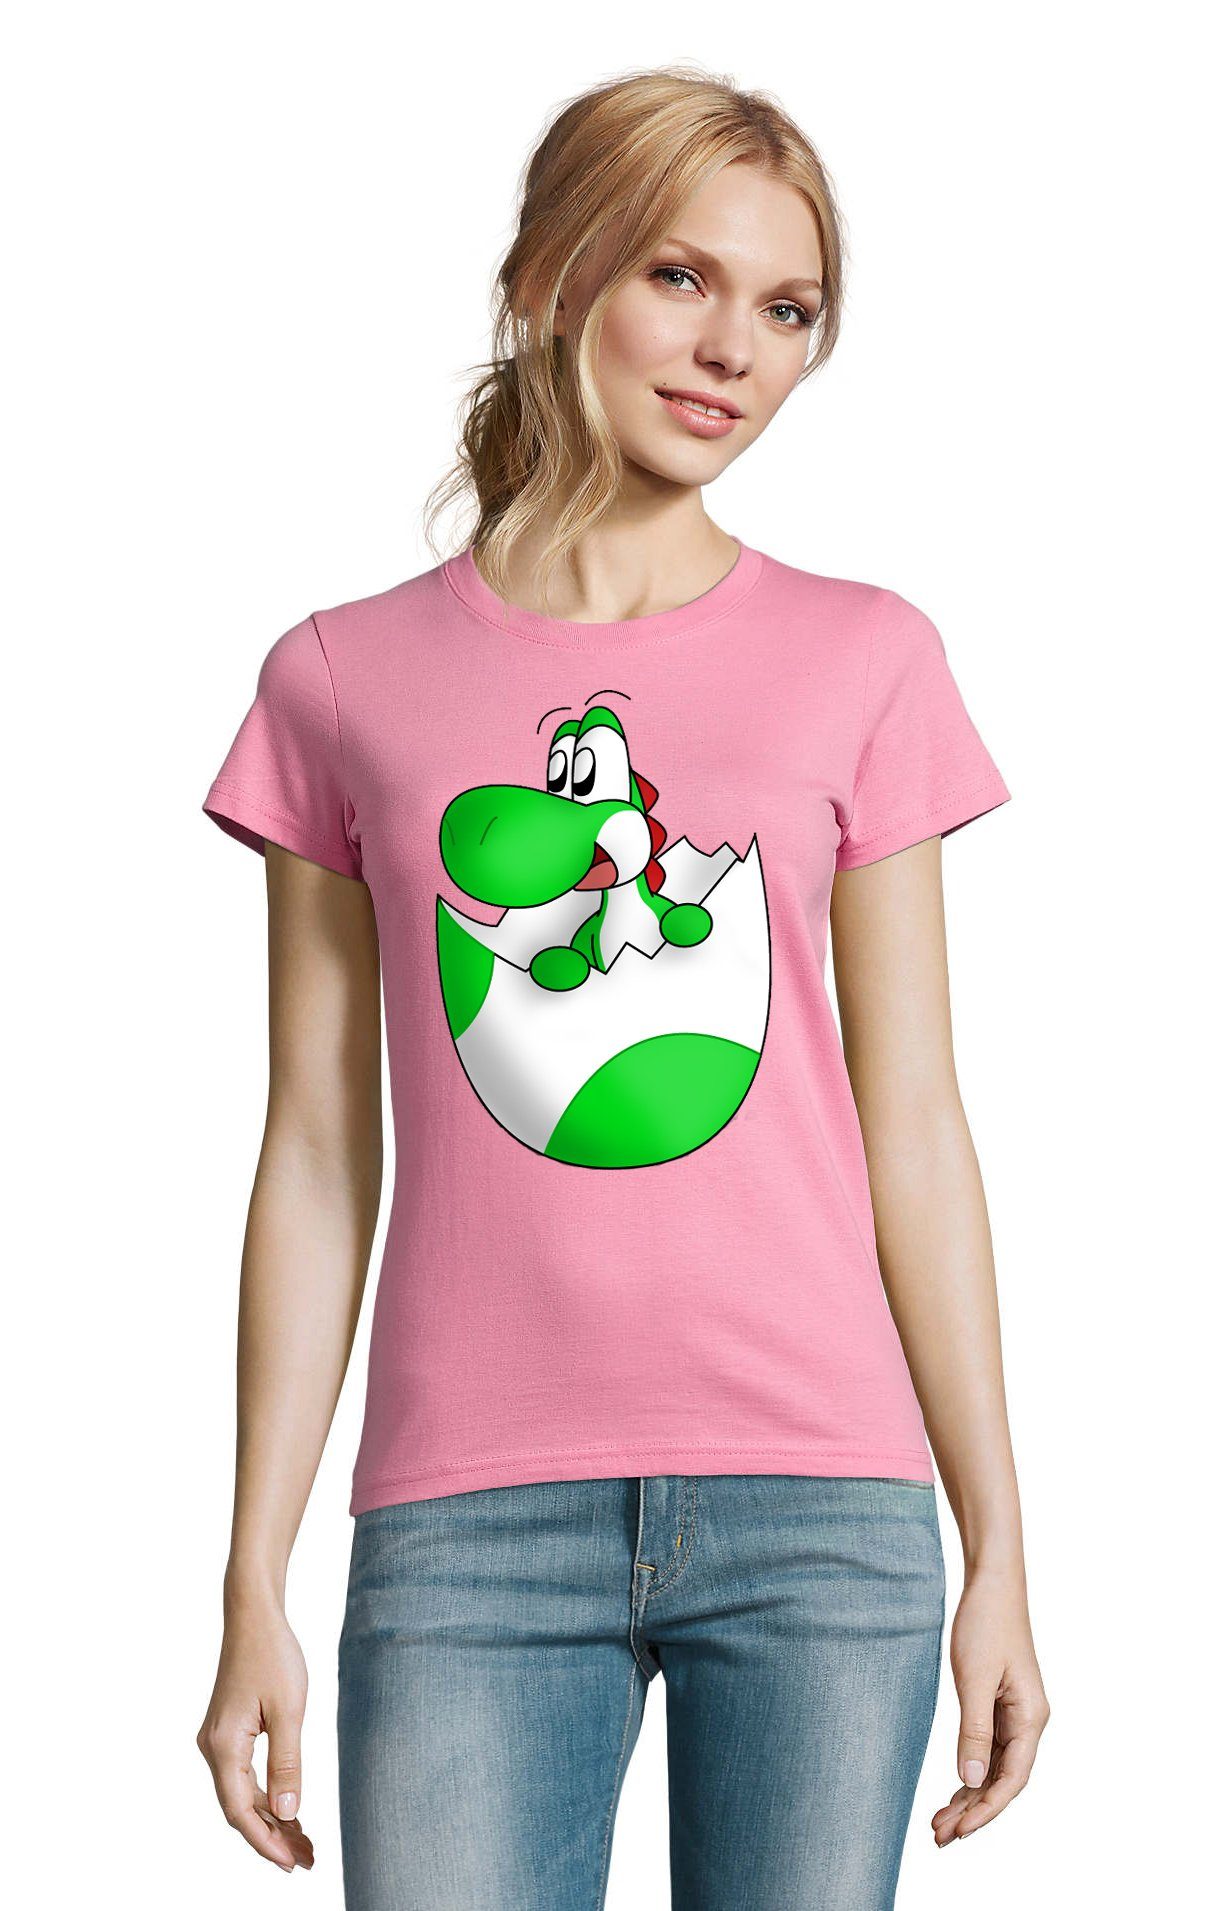 Blondie & Brownie T-Shirt Damen Ei Konsole Yoshi Nintendo Spiel Rosa Gaming Mario Baby